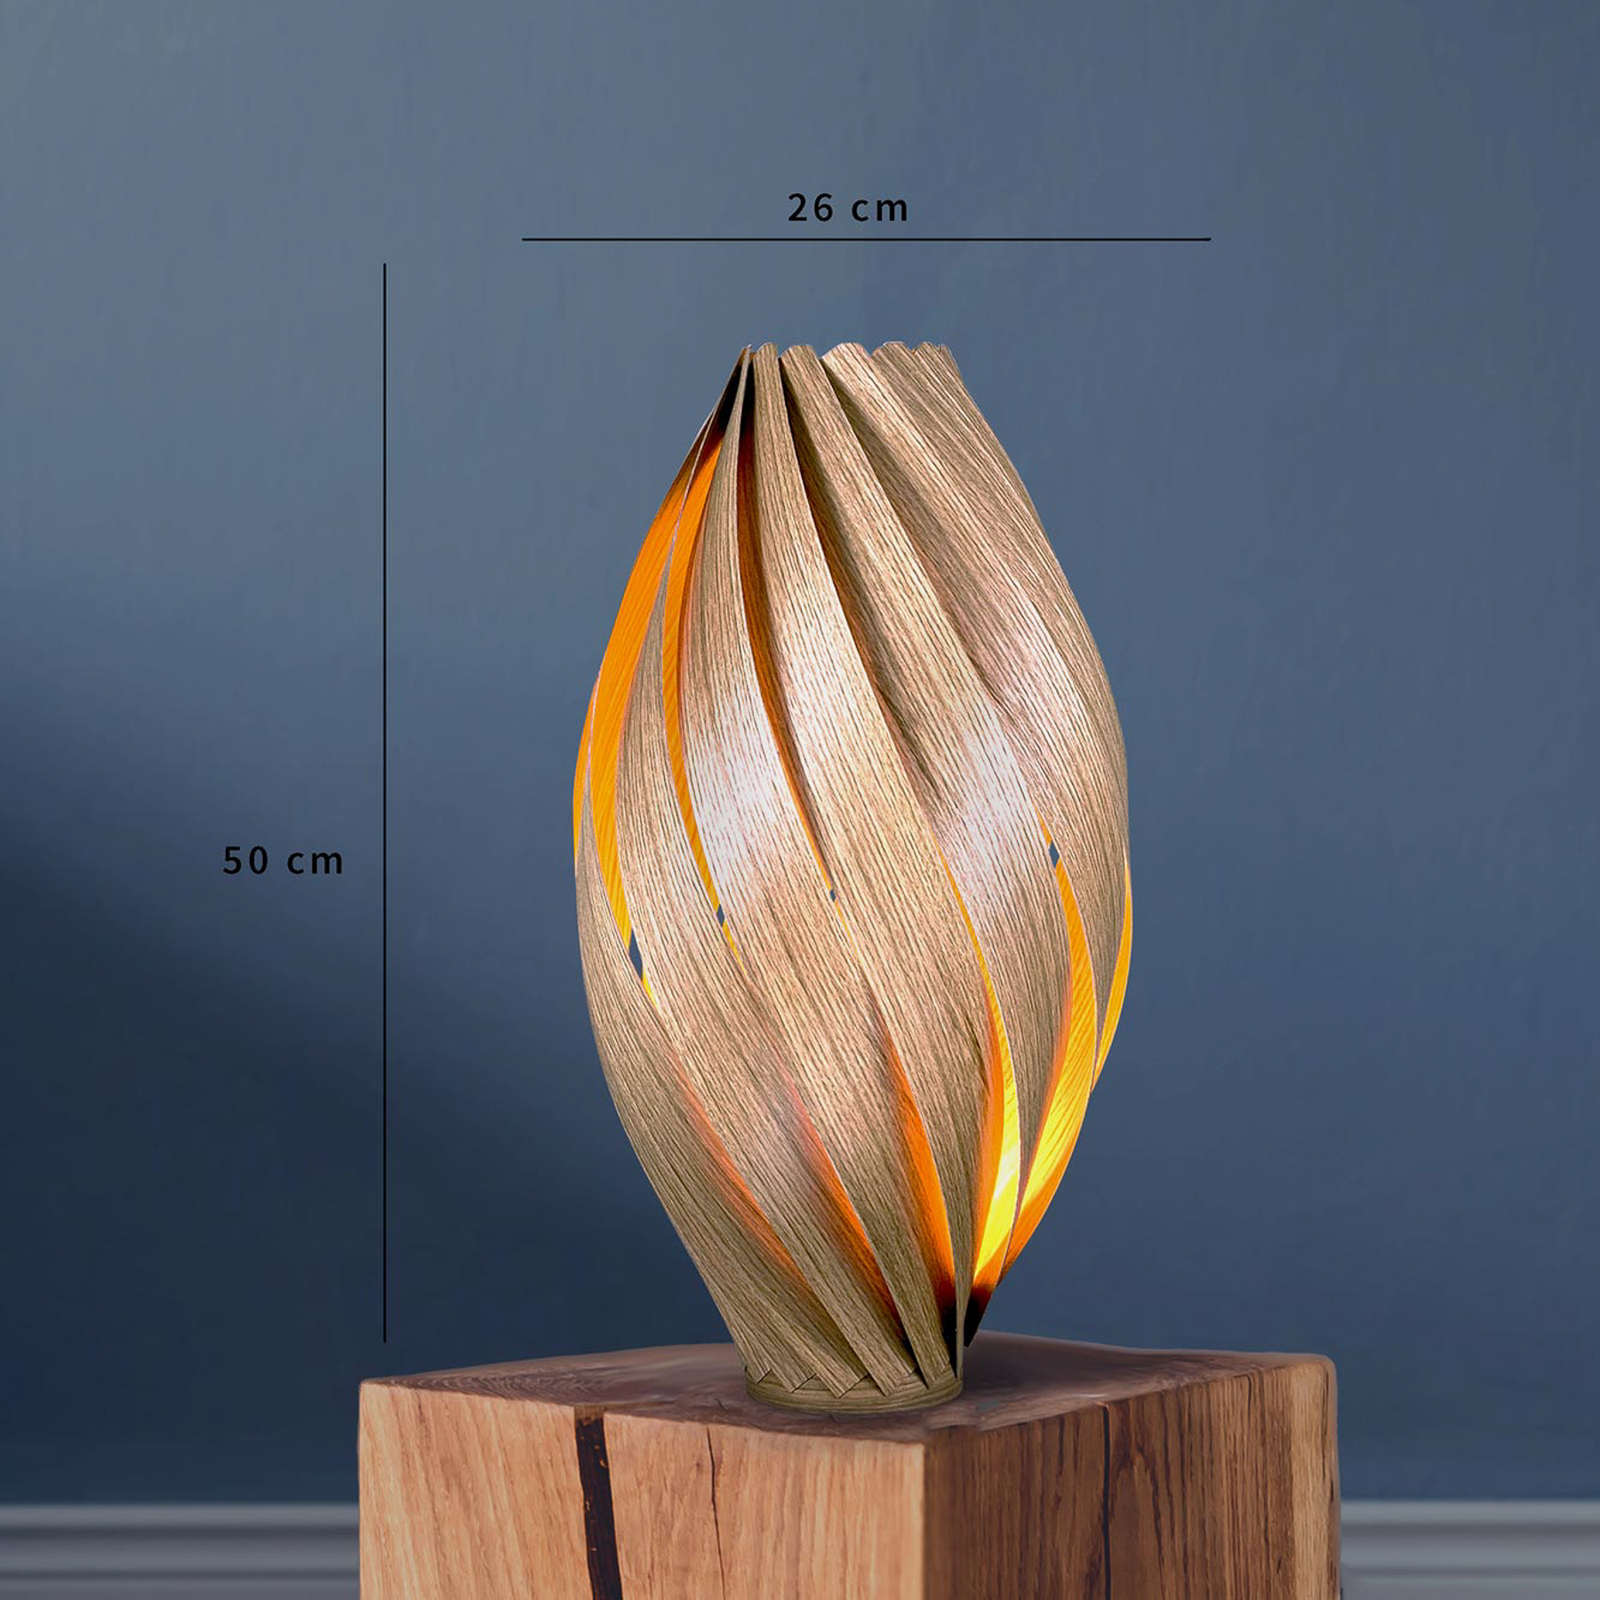 Gofurnit Ardere lampe à poser, chêne, haut 50 cm